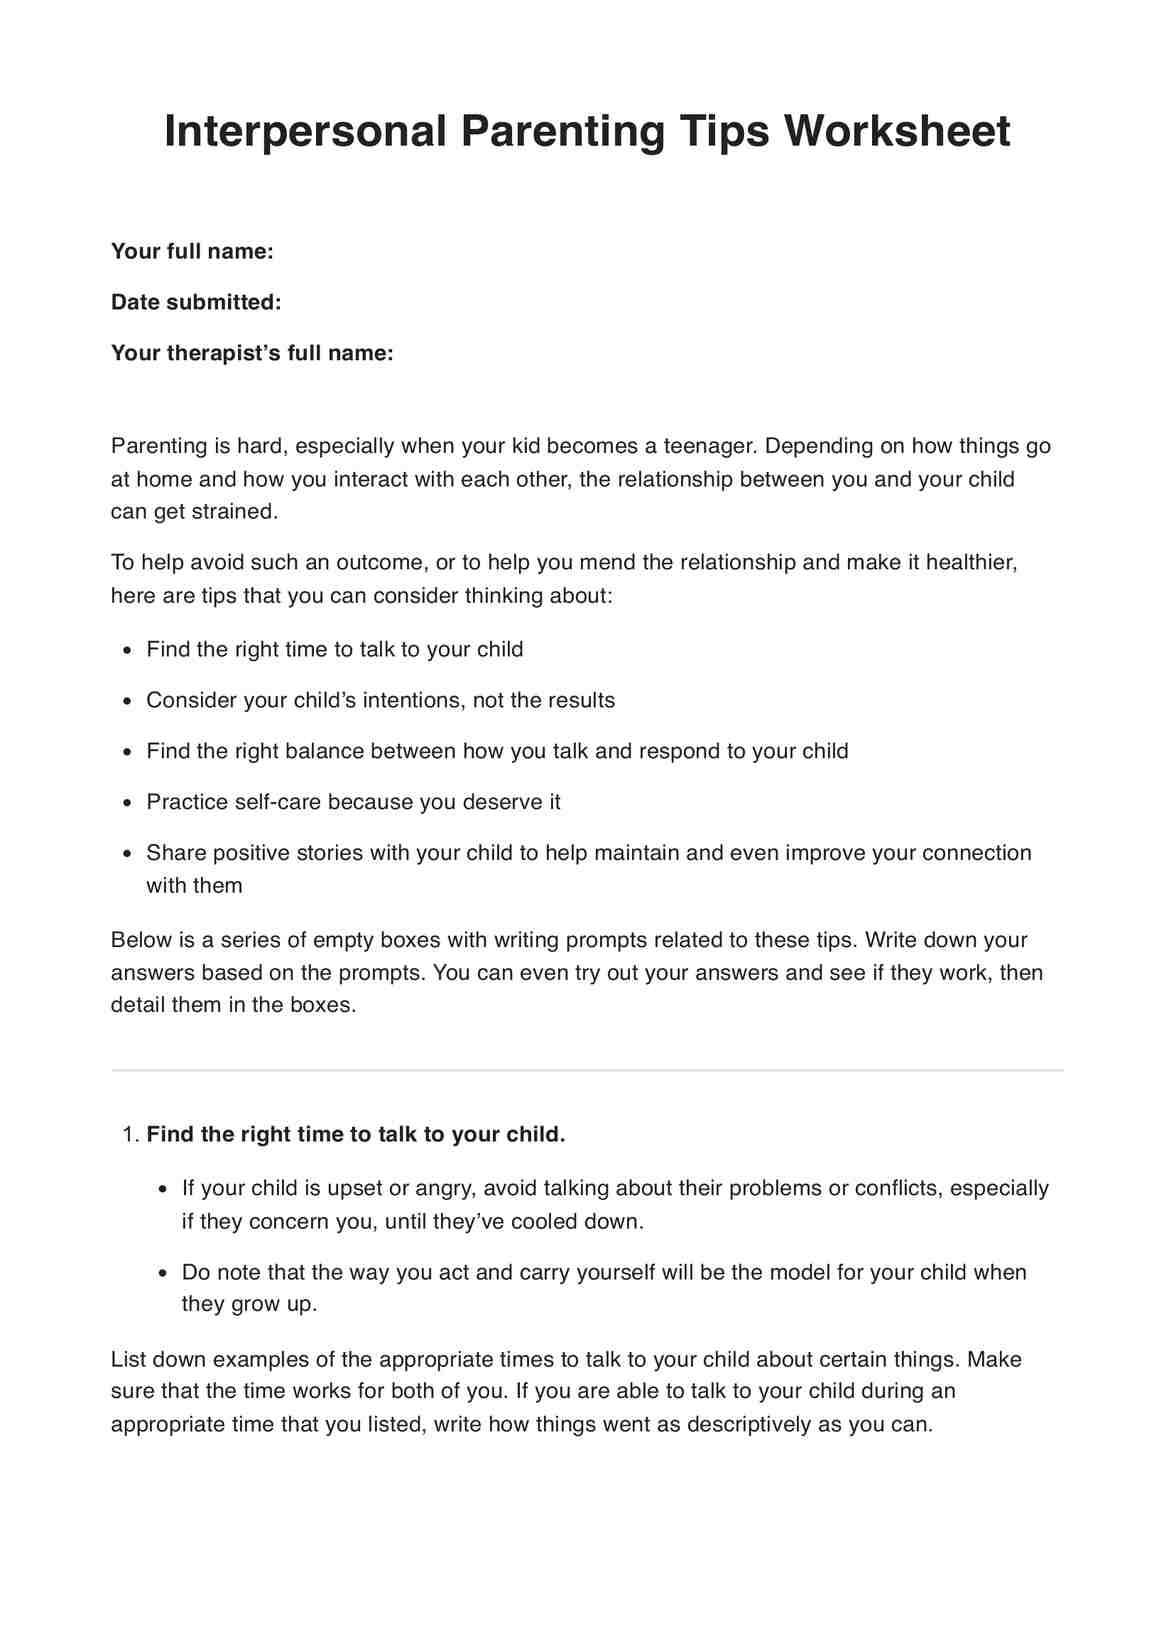 Interpersonal Parenting Tips Worksheet PDF Example